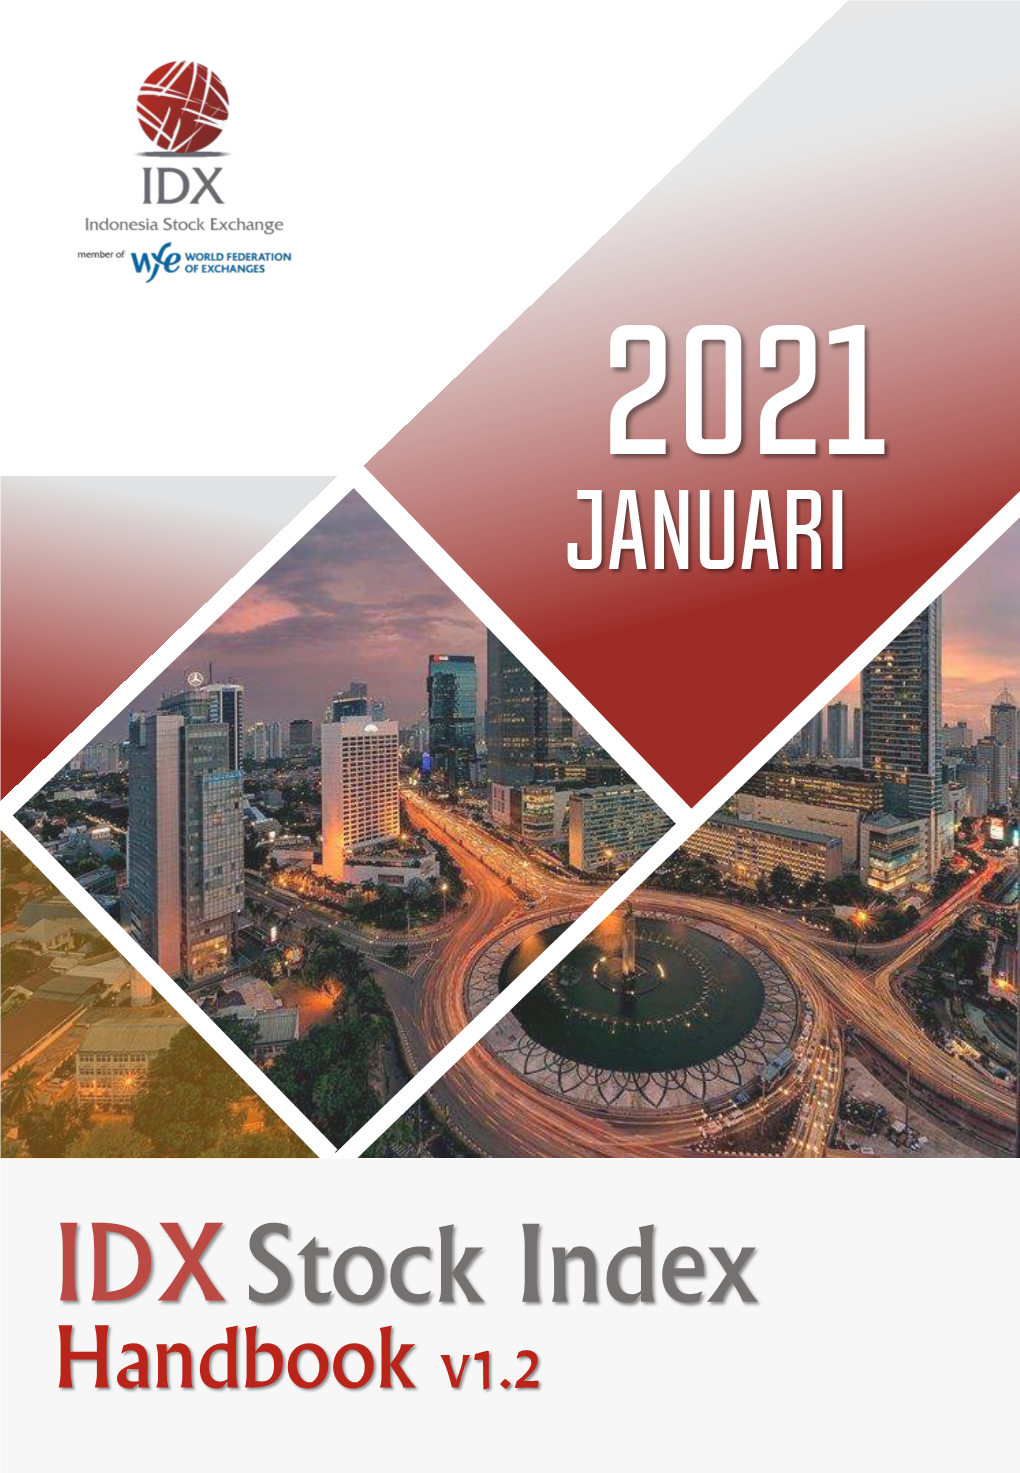 IDX Stock Index Handbook V1.2 Pengantar